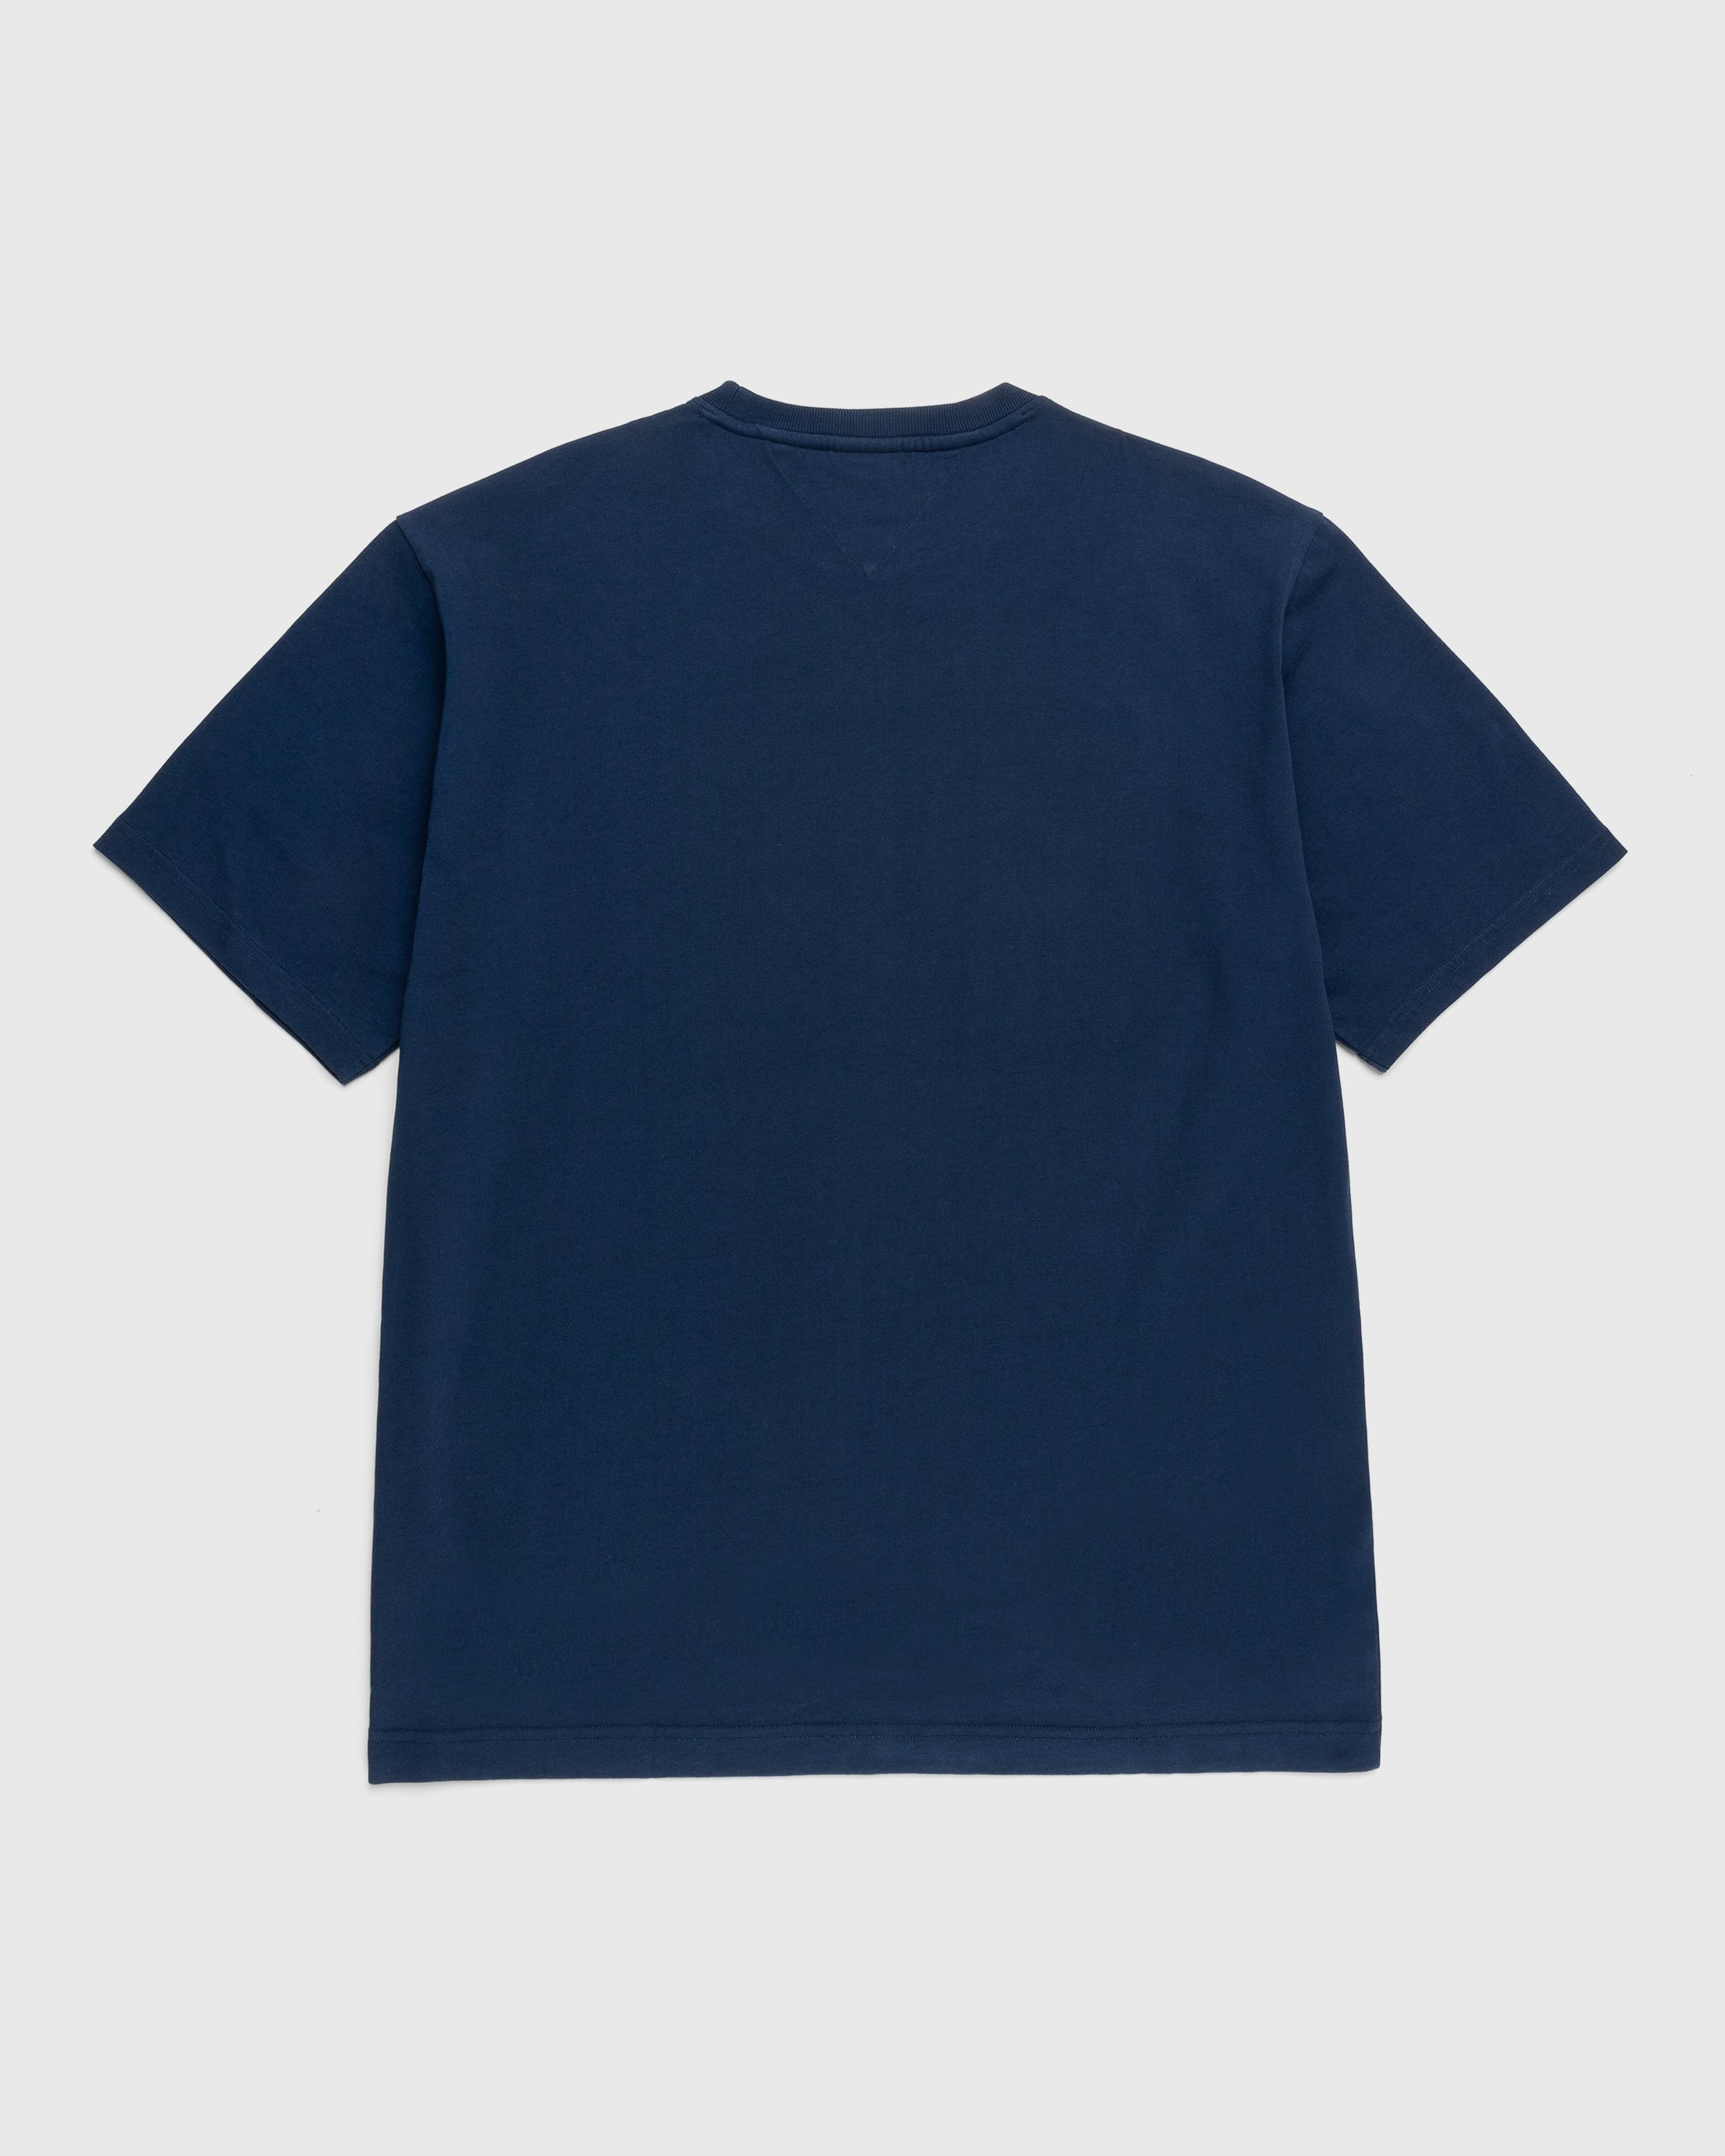 Patta x Tommy Hilfiger - T-Shirt Sport Navy - Clothing - Blue - Image 2